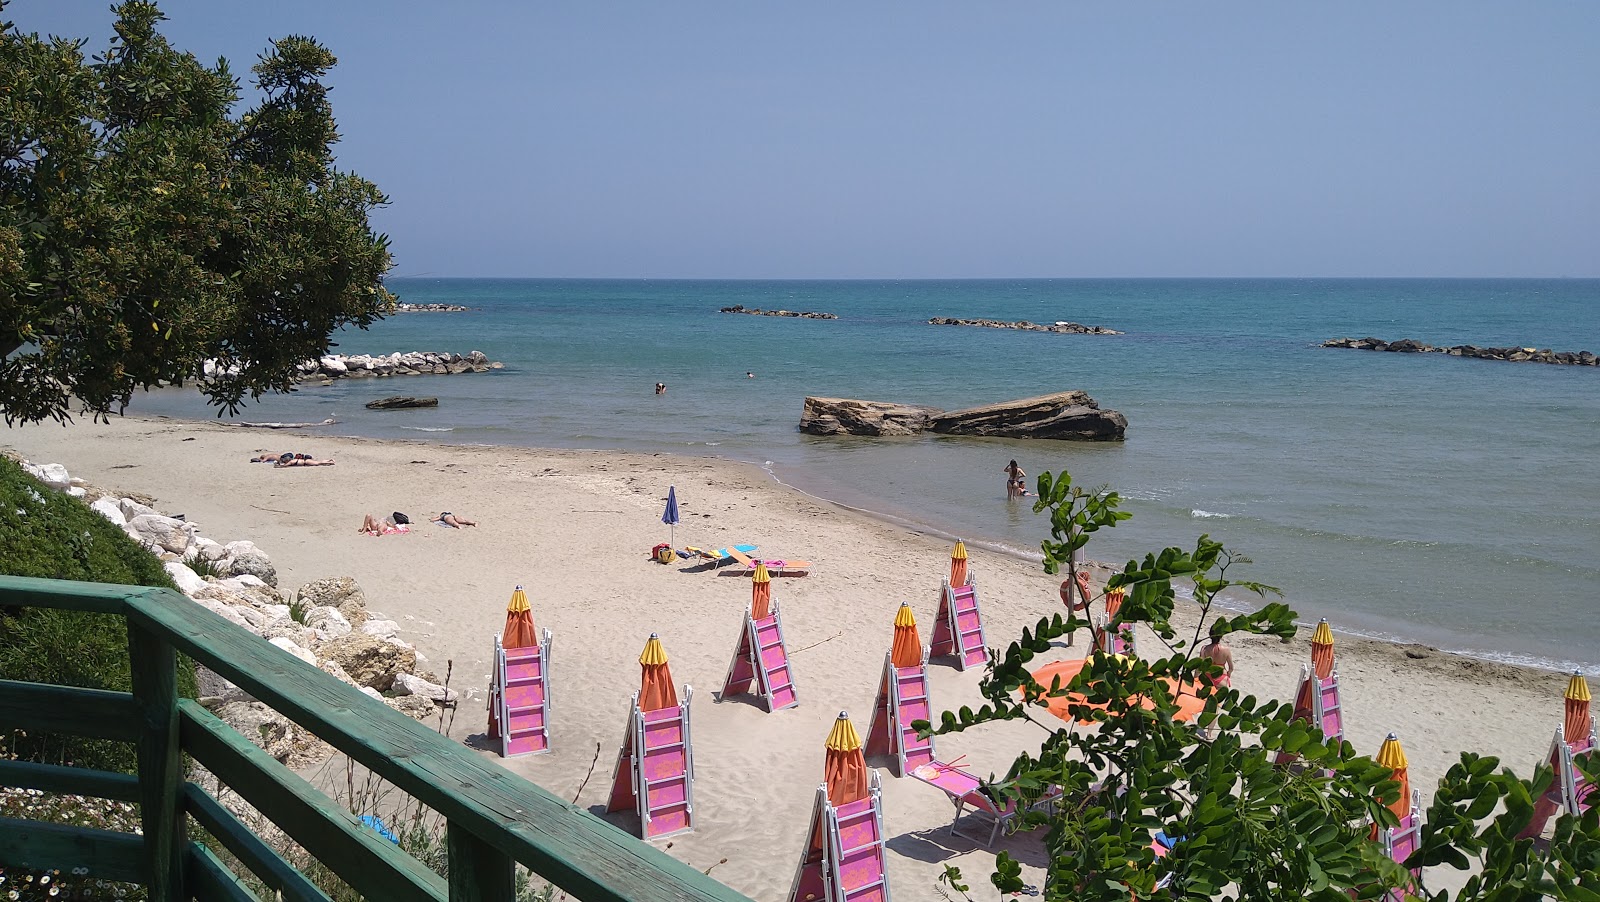 Spiaggia di Cavalluccio'in fotoğrafı turkuaz saf su yüzey ile